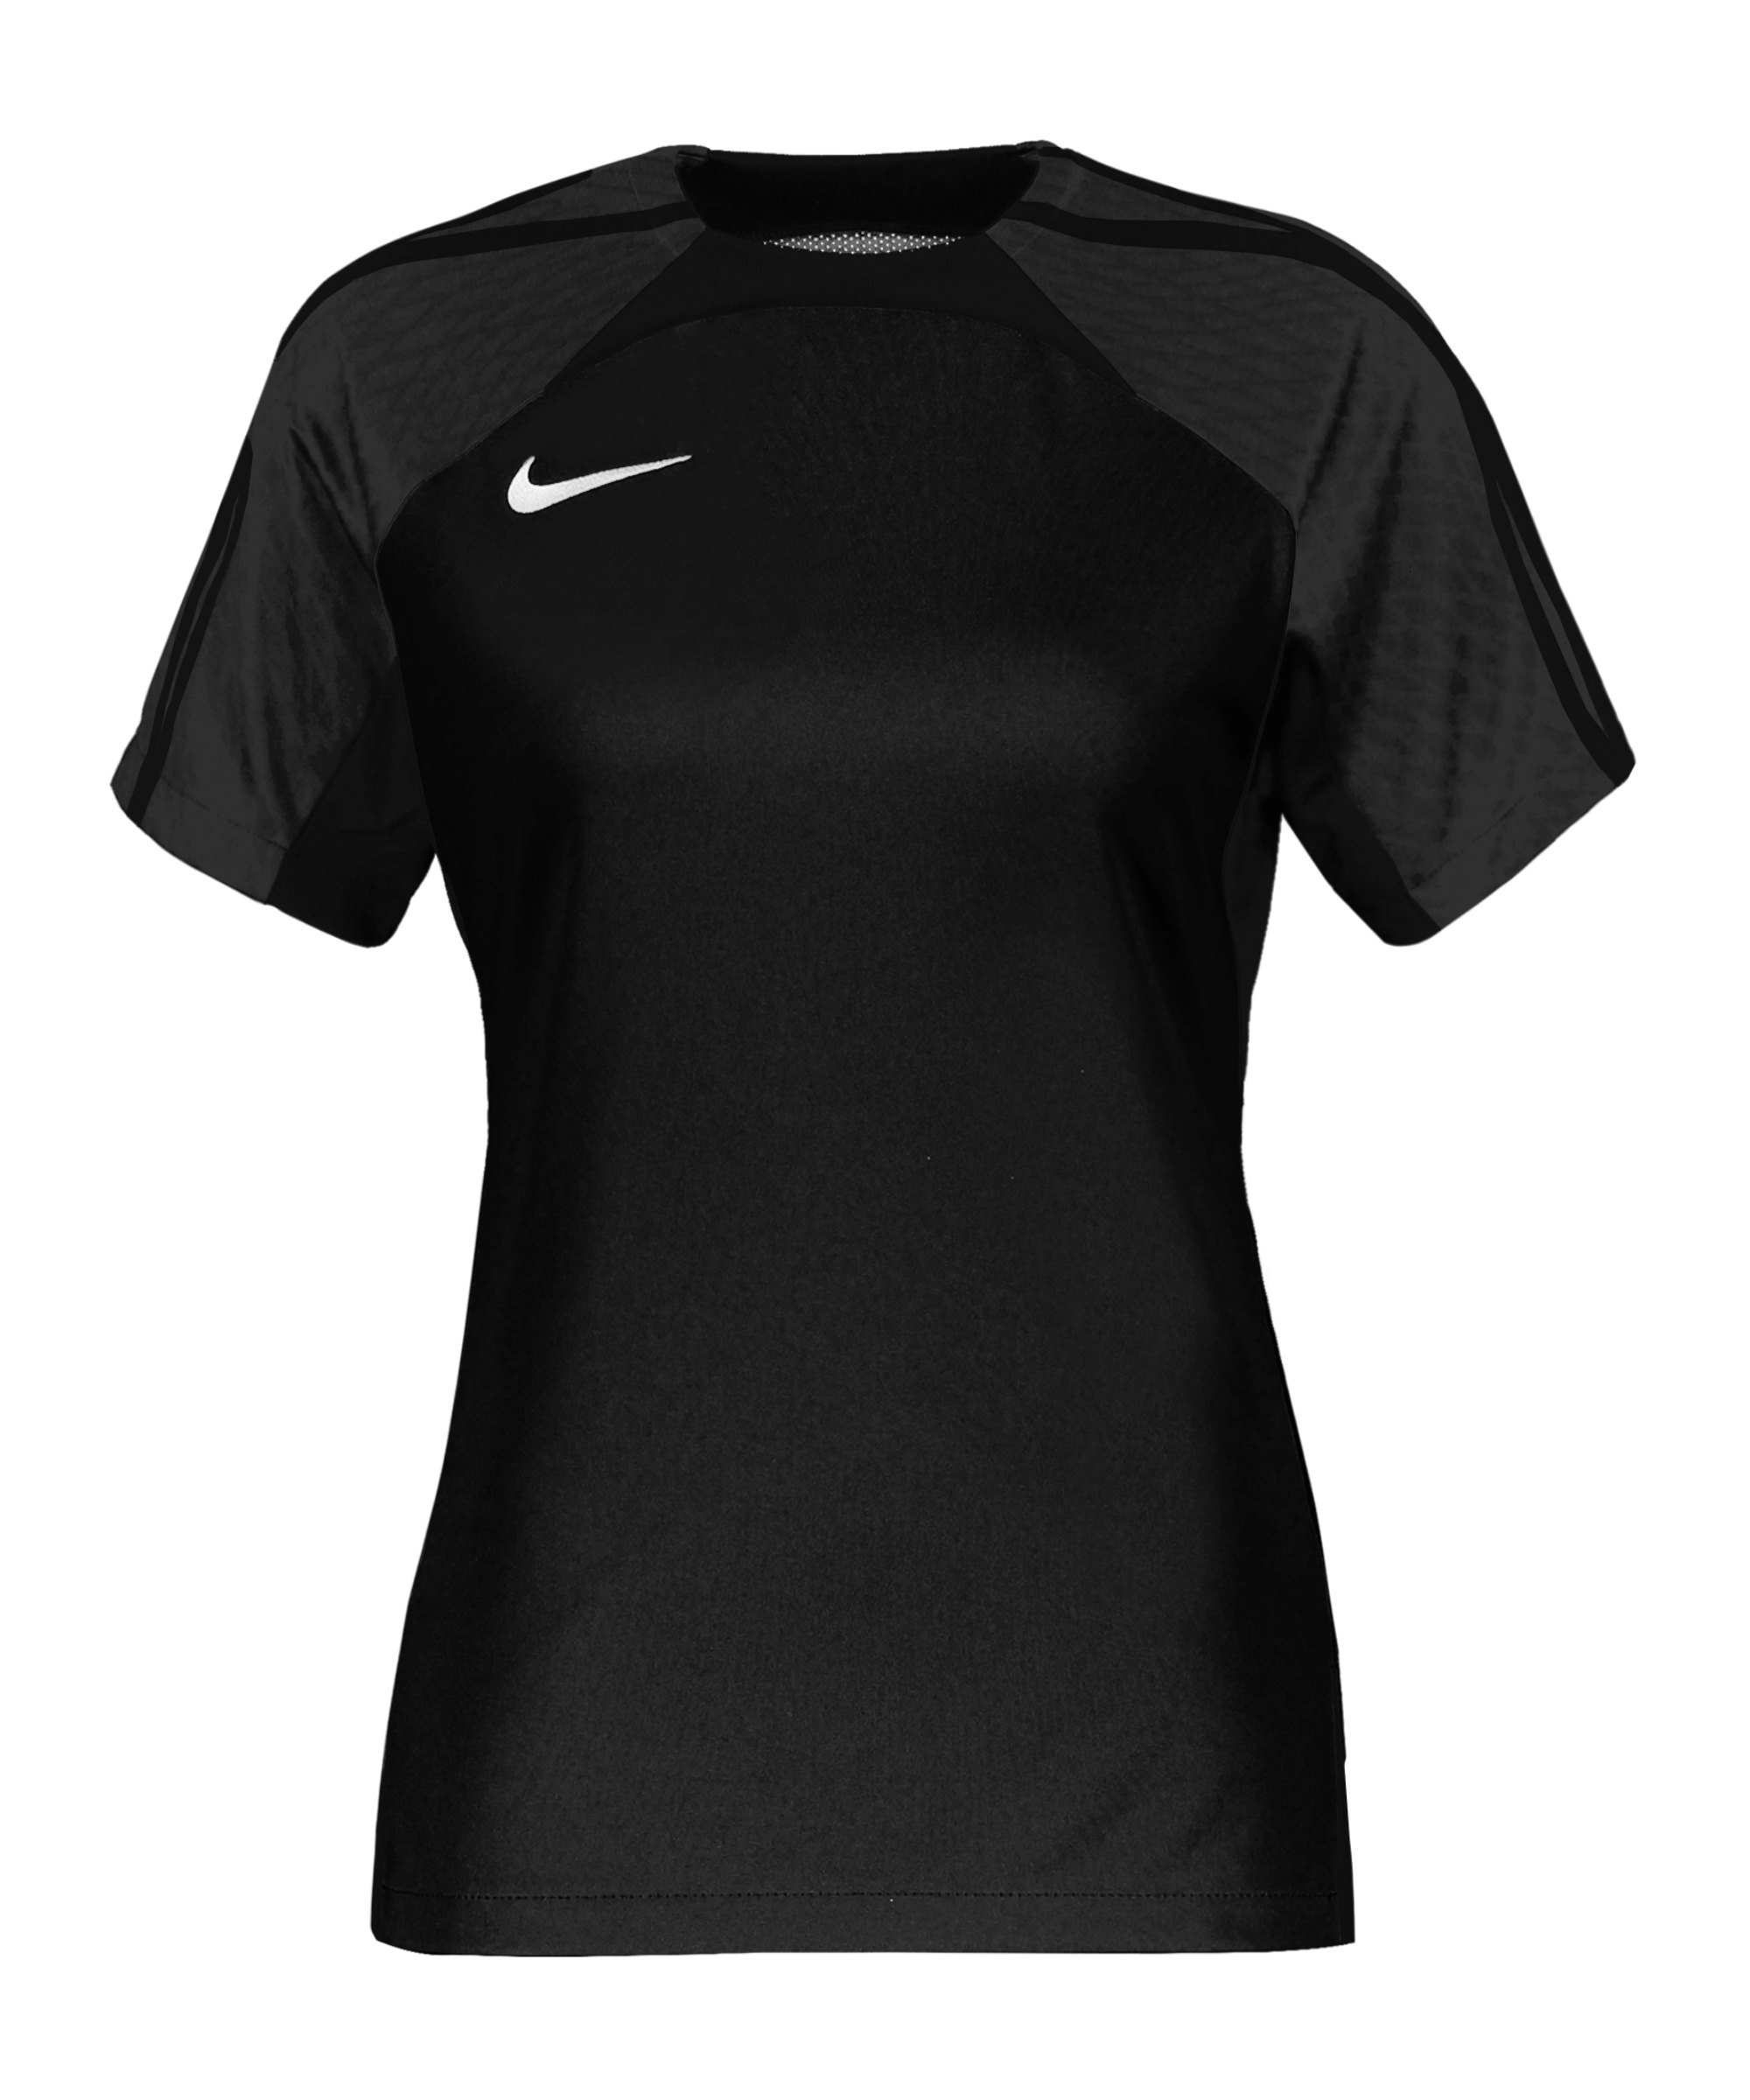 Nike Strike III Trikot Damen Schwarz F010 - schwarz